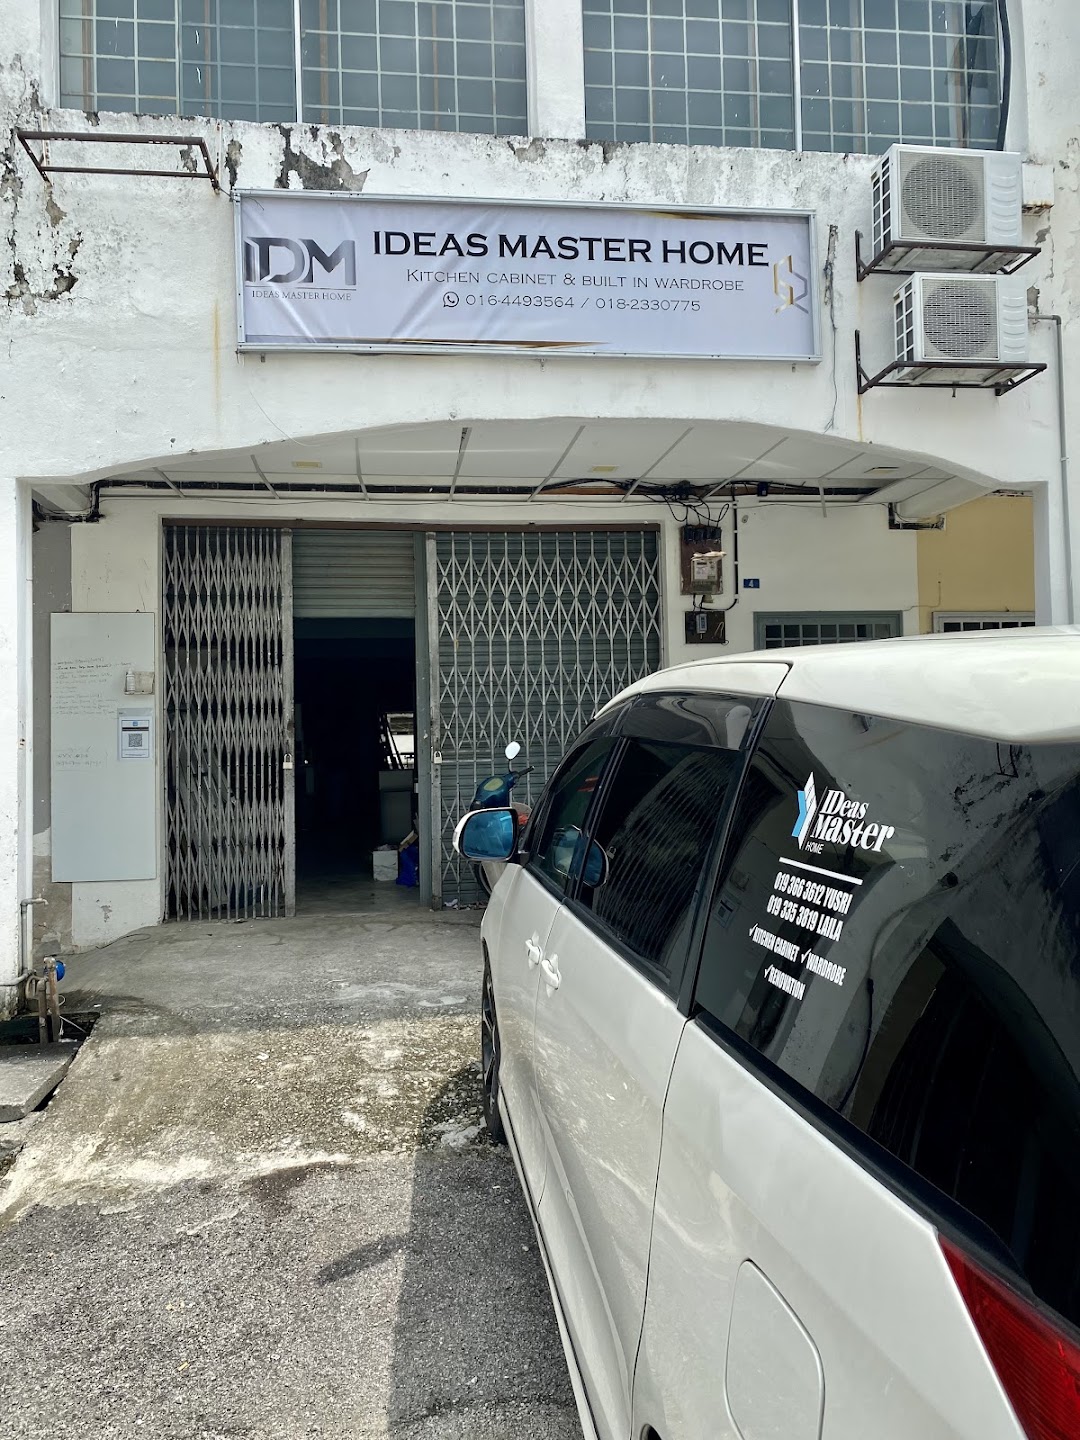 IDeas Master Home